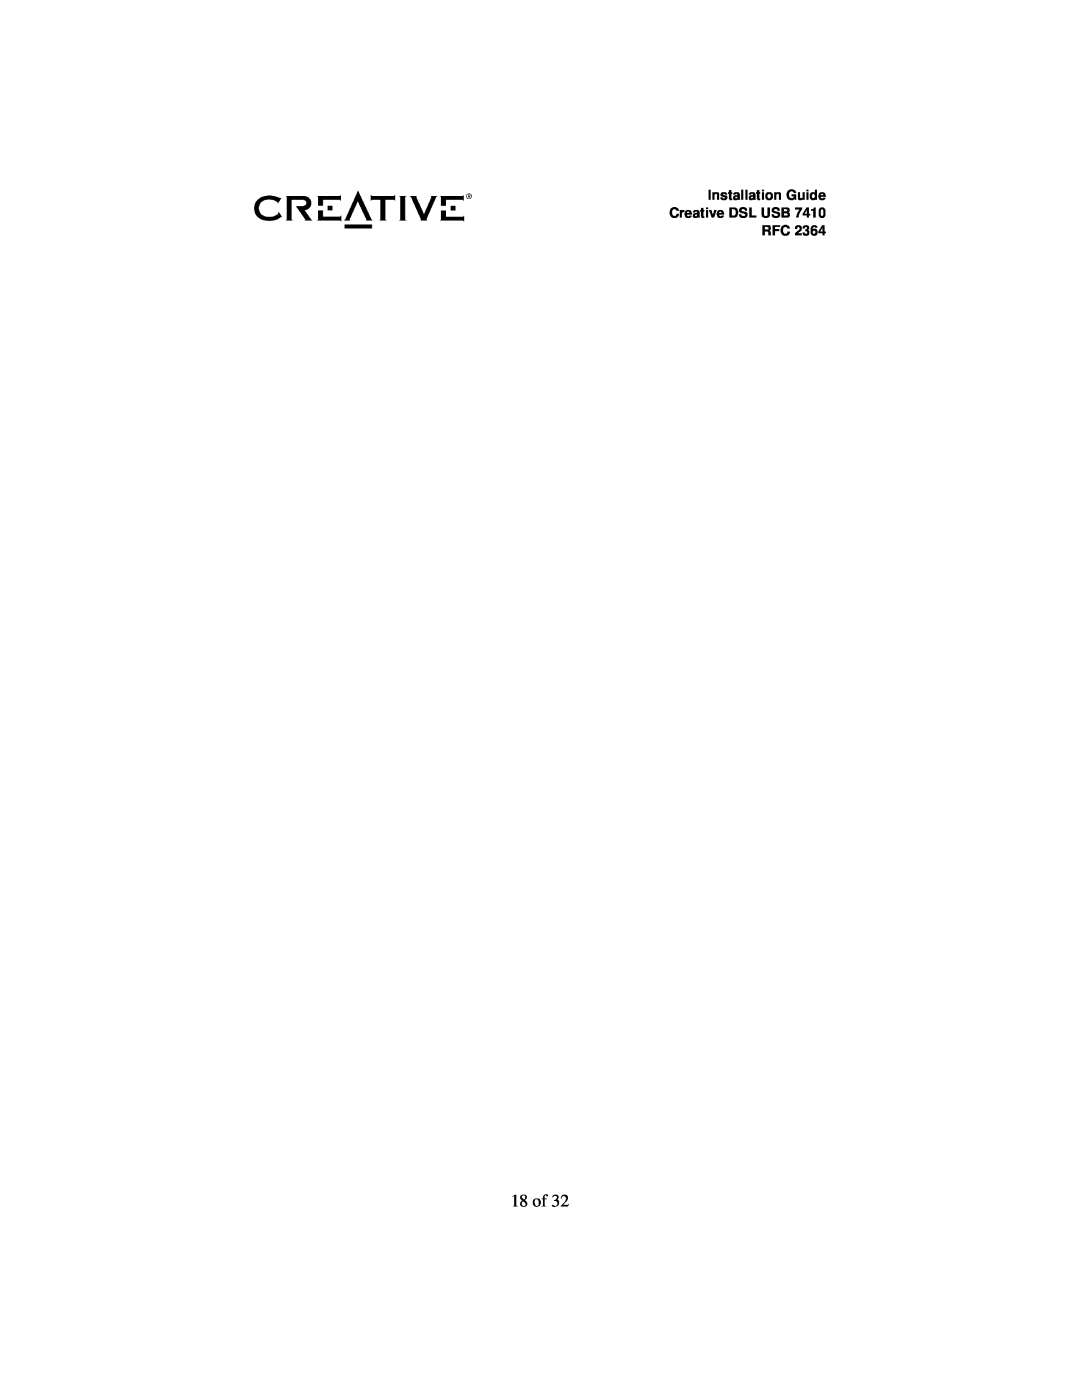 Creative RFC 2364 appendix 18 of, Installation Guide Creative DSL USB RFC 